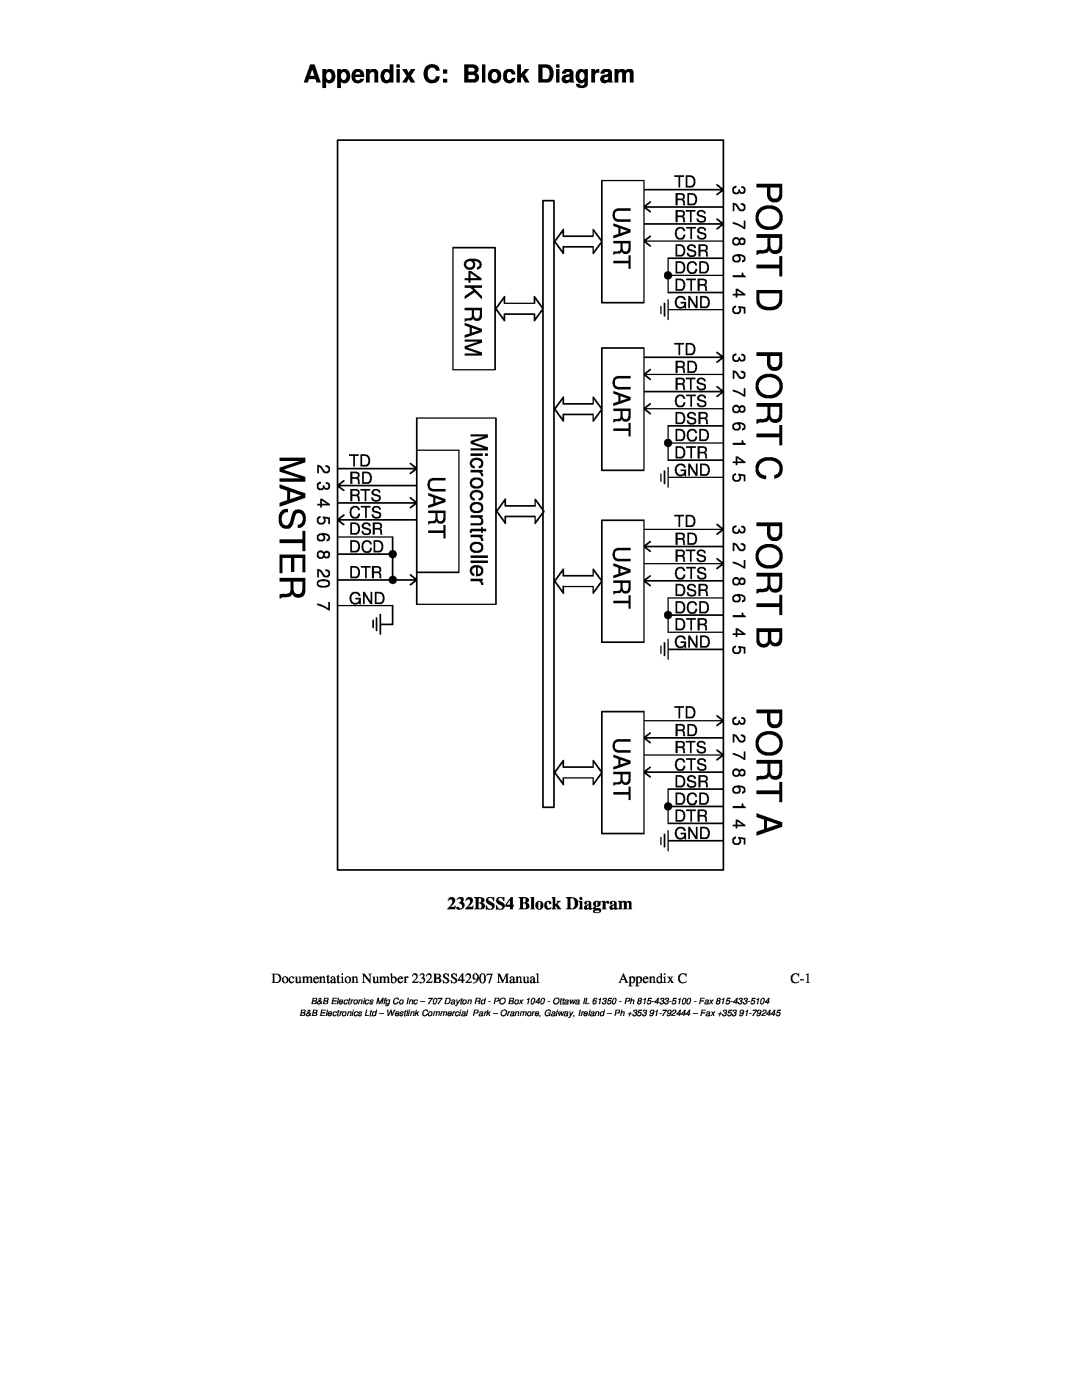 B&B Electronics 232BSS4, Buffered Smart Switch Appendix C Block Diagram, Master, Uart Uart, Microcontroller, 64KRAM 